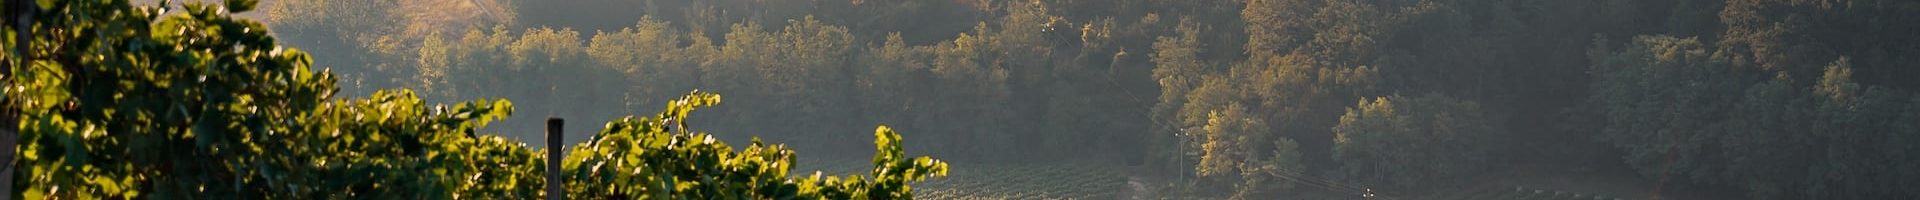 tuscany-sangiovese-vineyard_2052344000